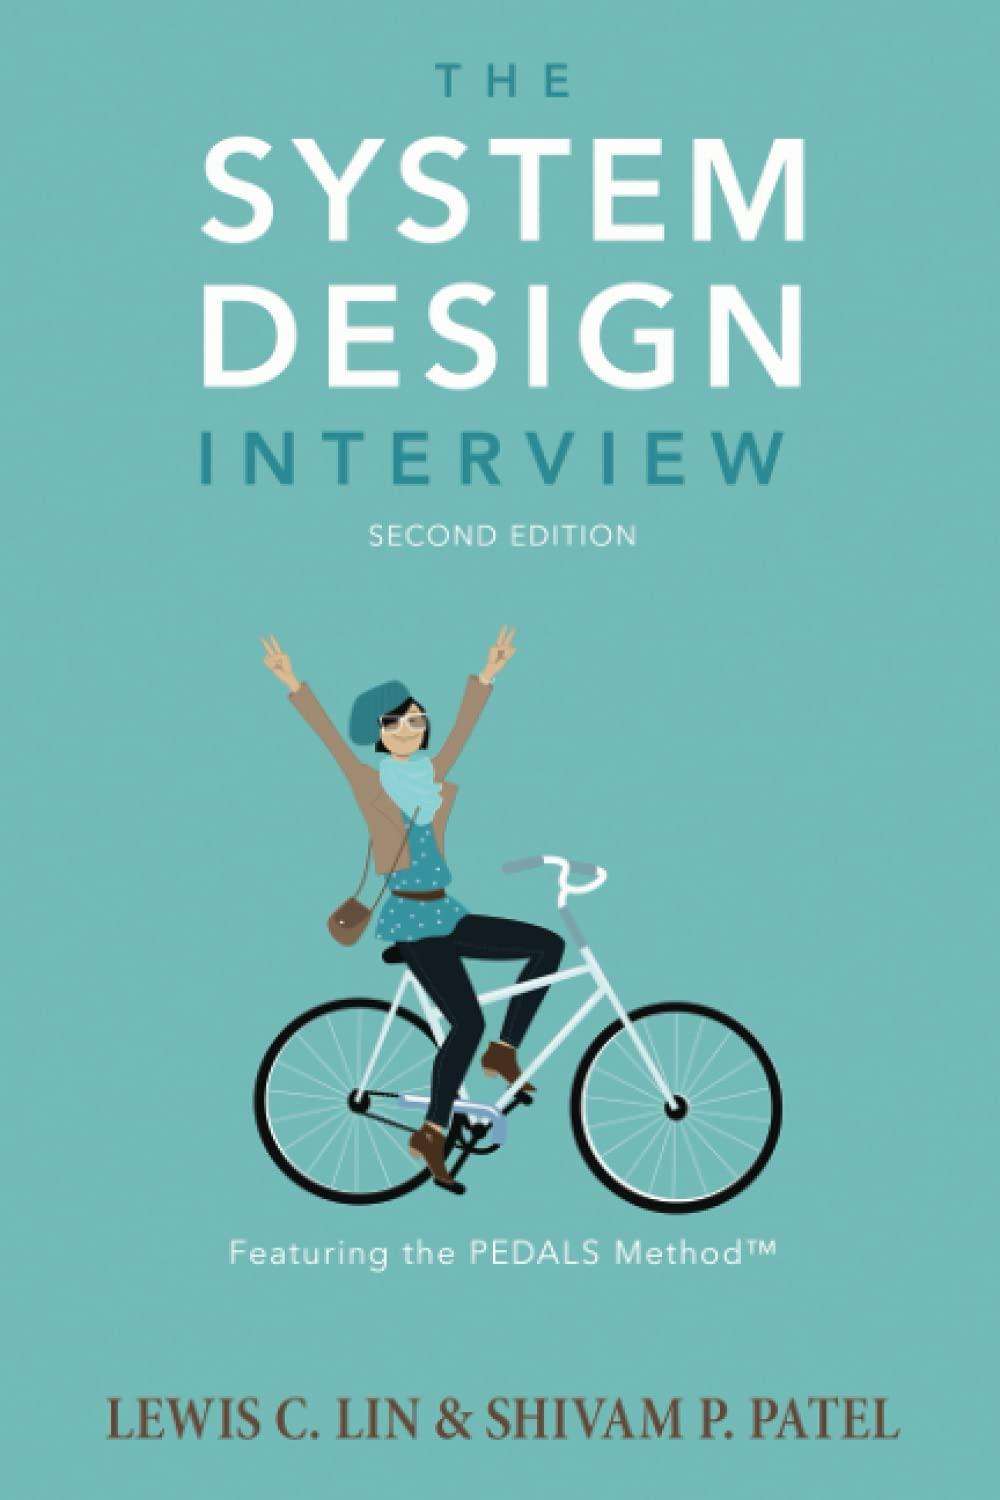 the system design interview 2nd edition lewis c. lin, shivam p. patel b09559njkl, 979-8735625452